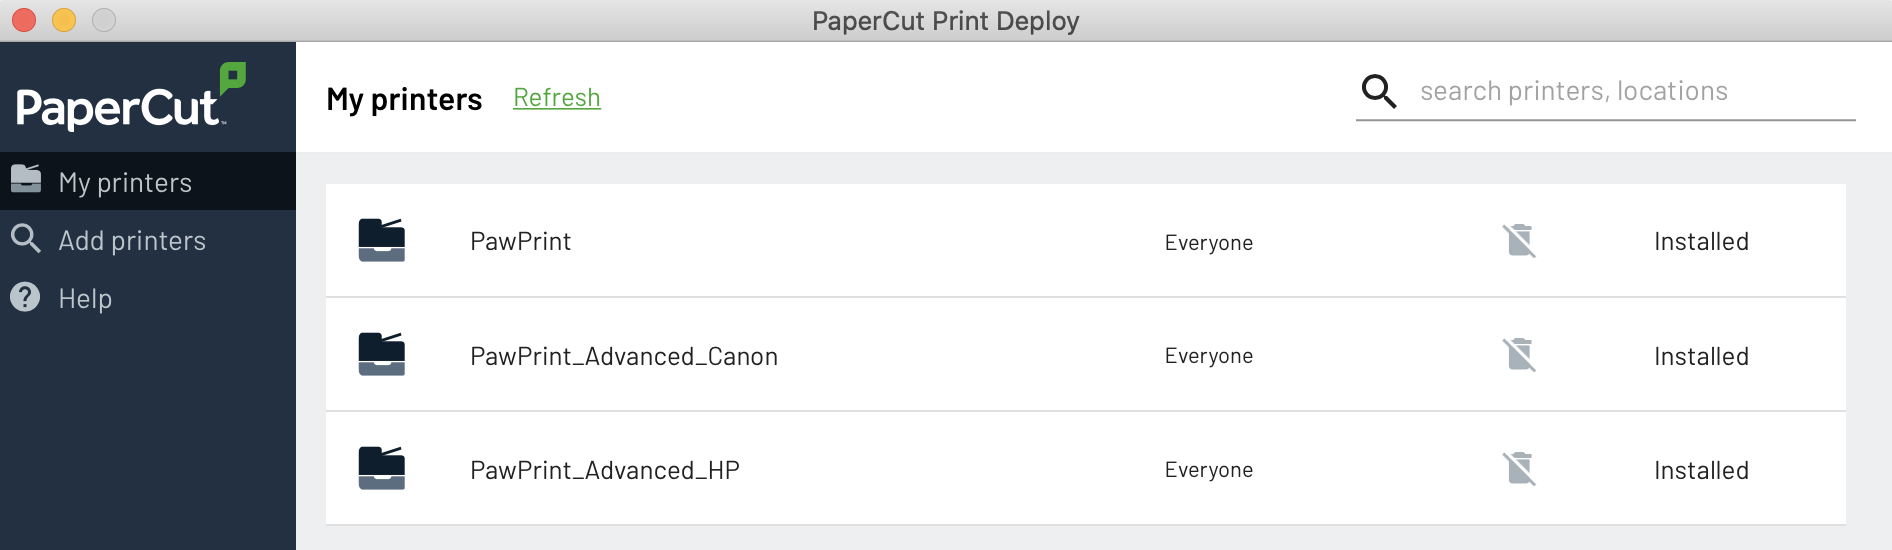 Print_Deploy_Printer_List.png